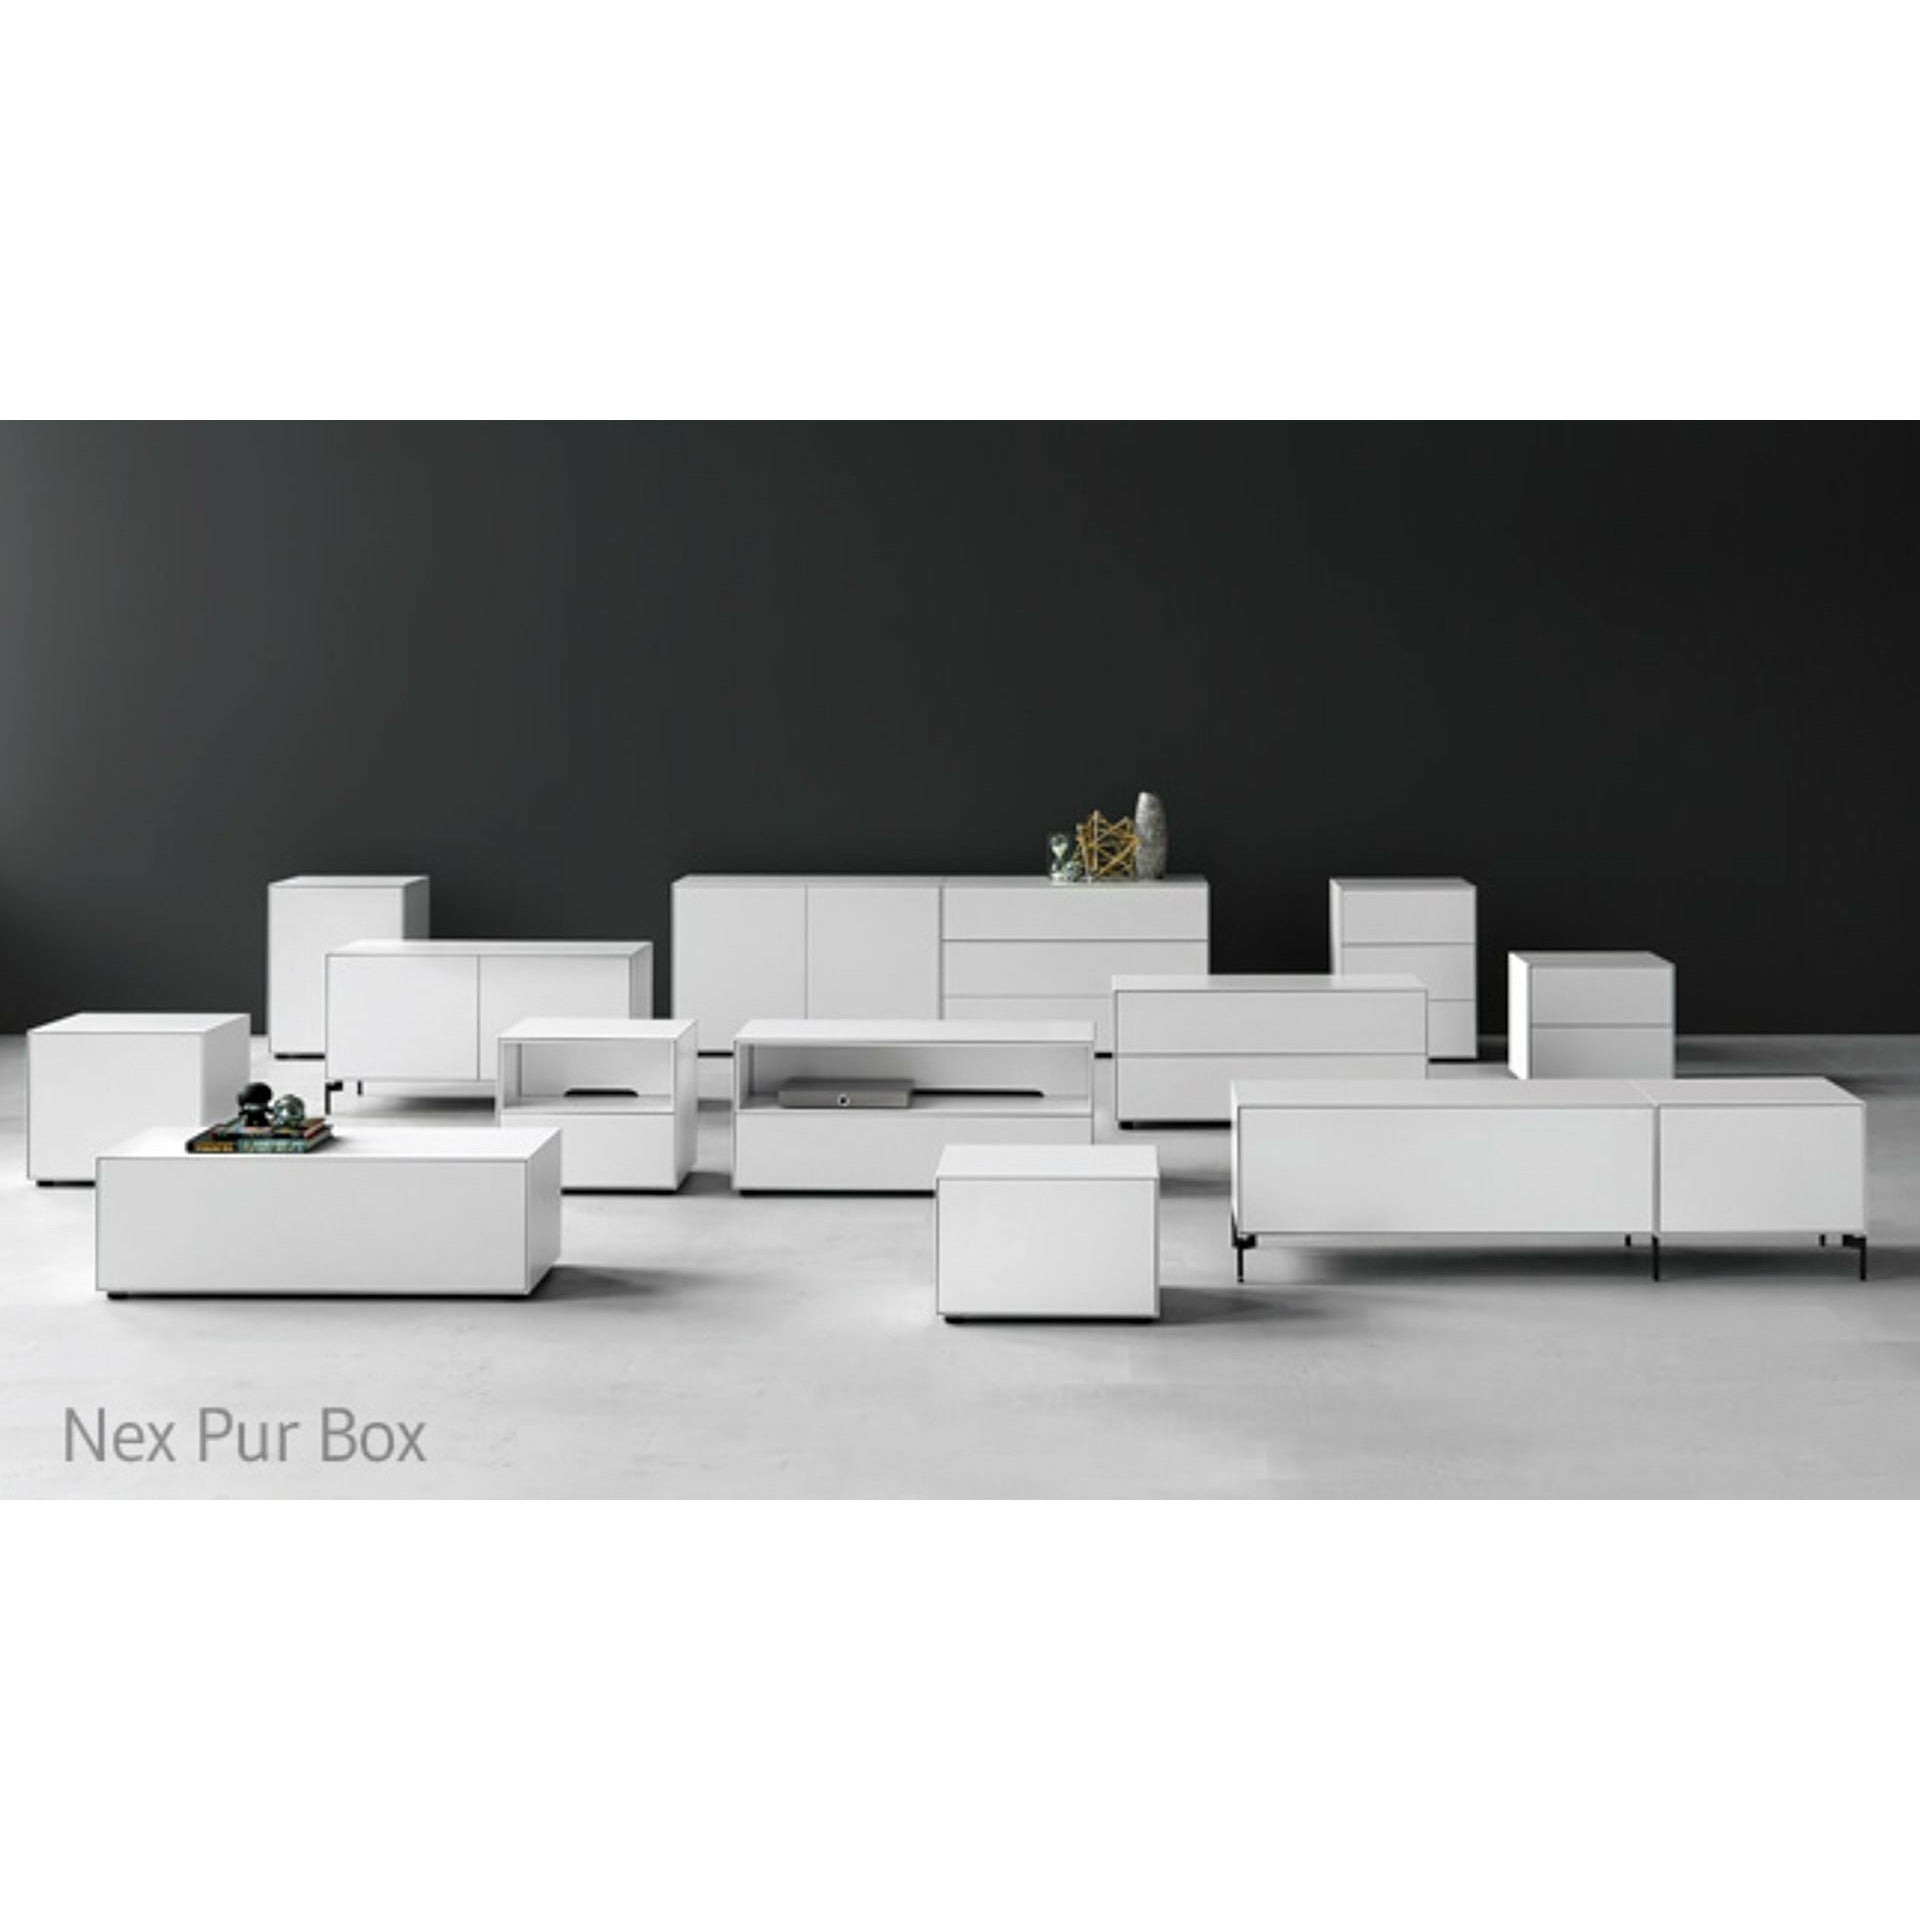 Piure Nex Pur Box HX W 50x120 cm, 2 laatikkoa